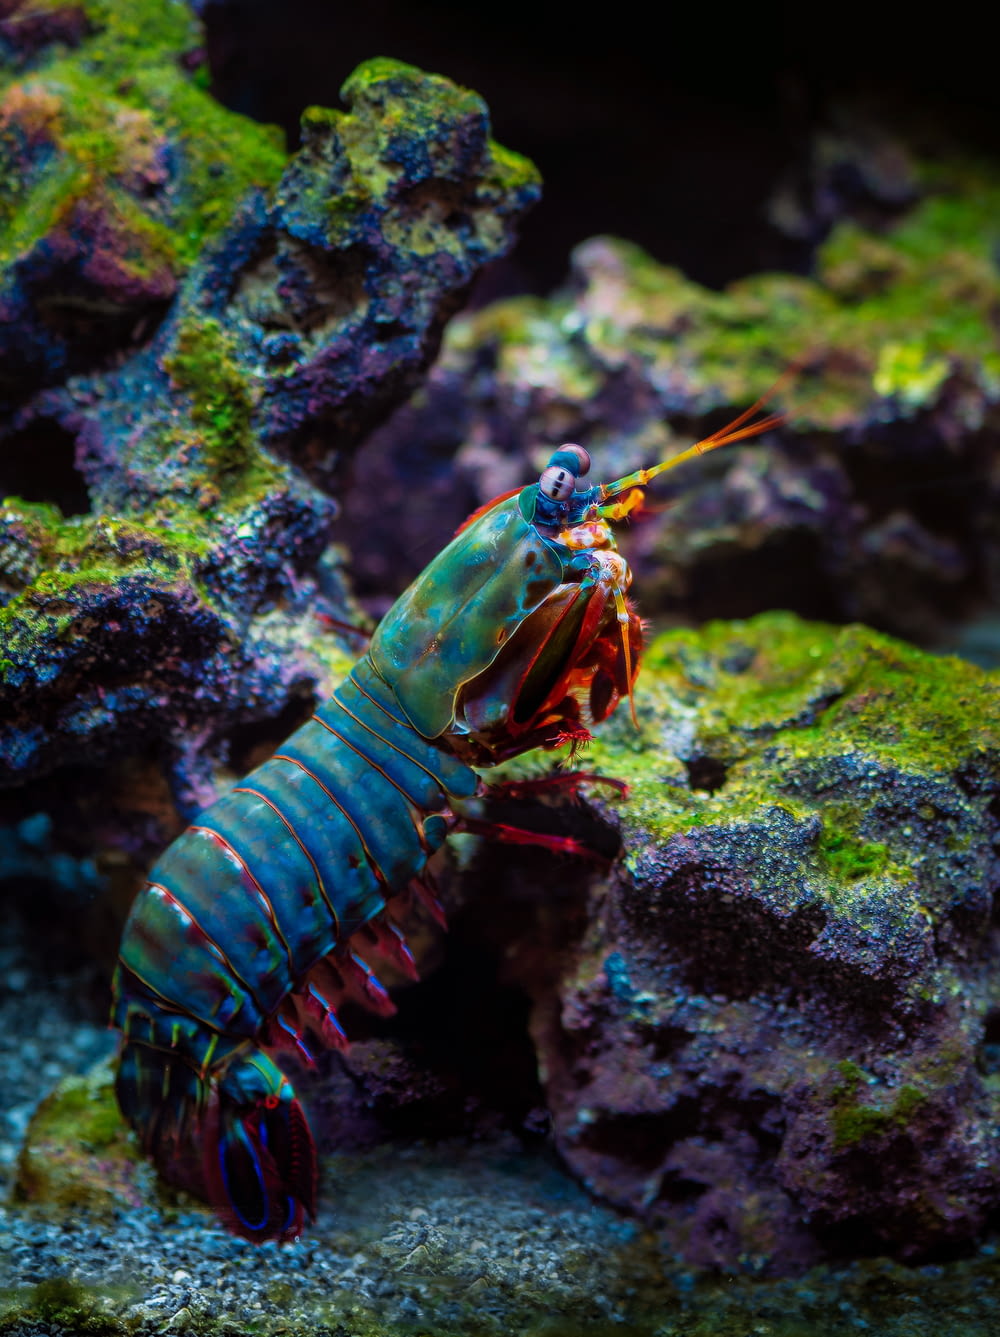 a blue and red shrimp in an aquarium